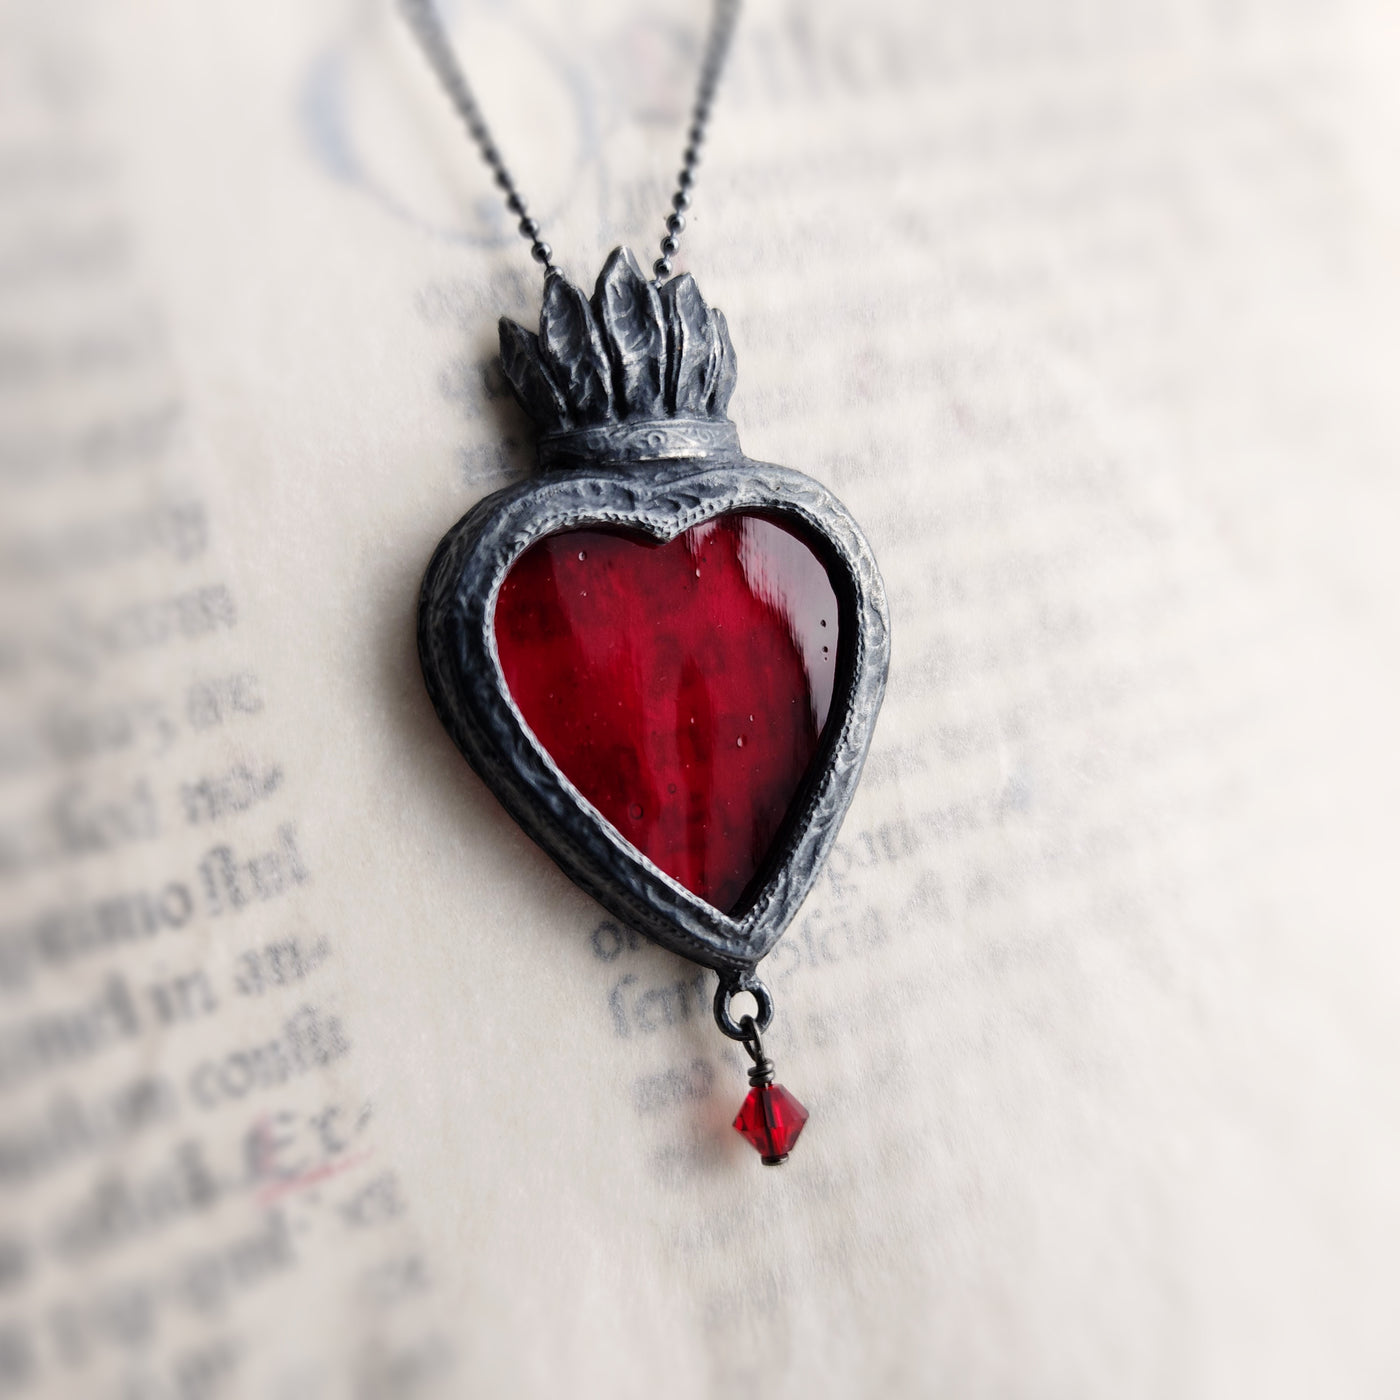 calabrum - sacred heart amulet